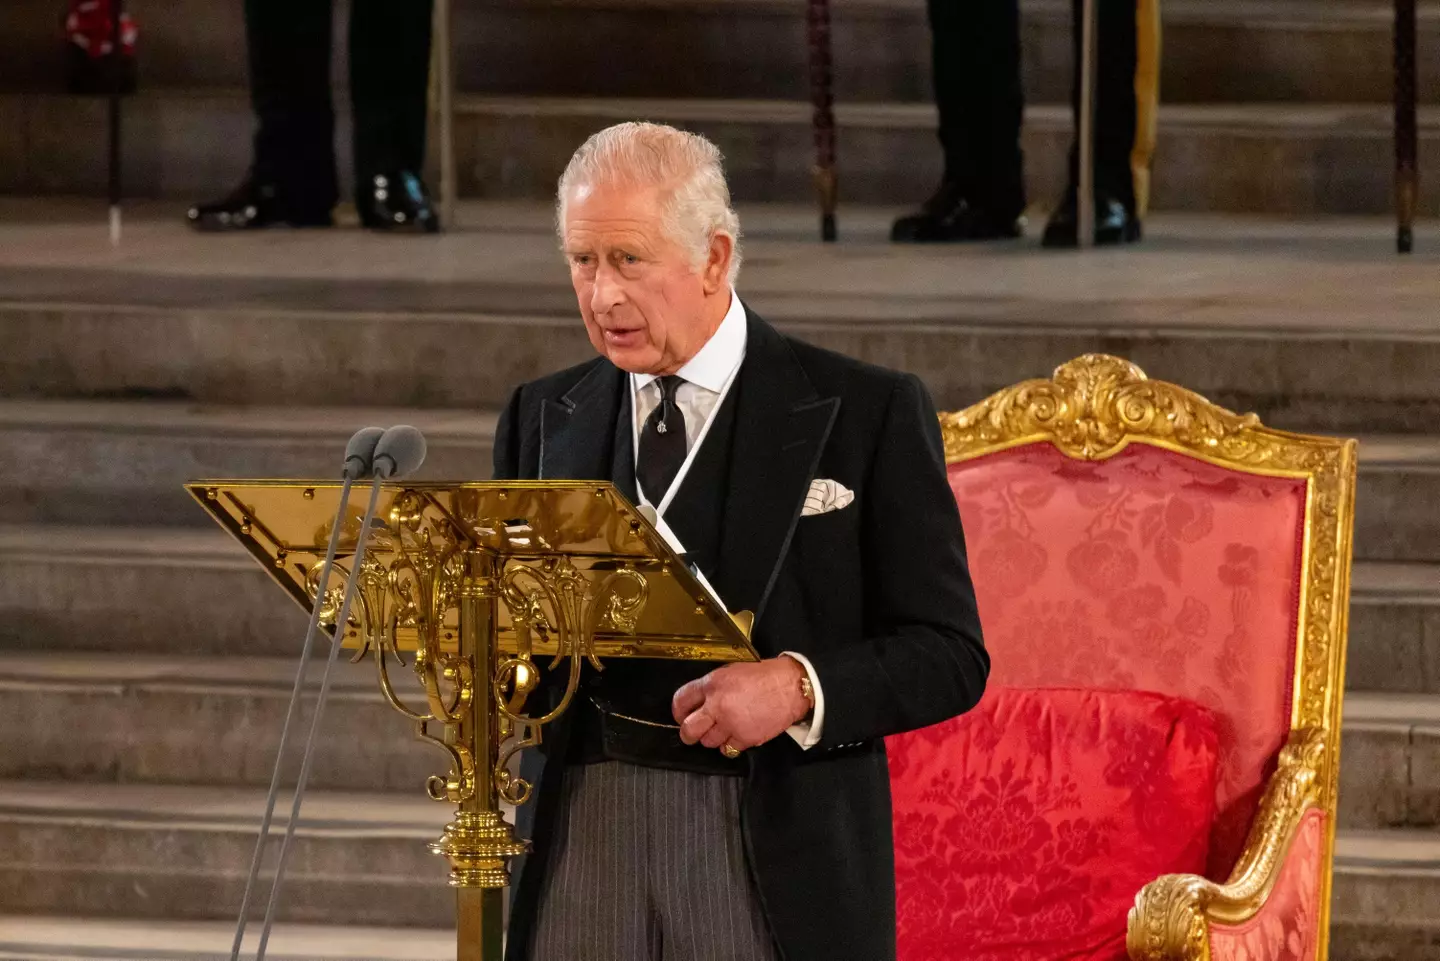 King Charles III's coronation will be broadcast live.